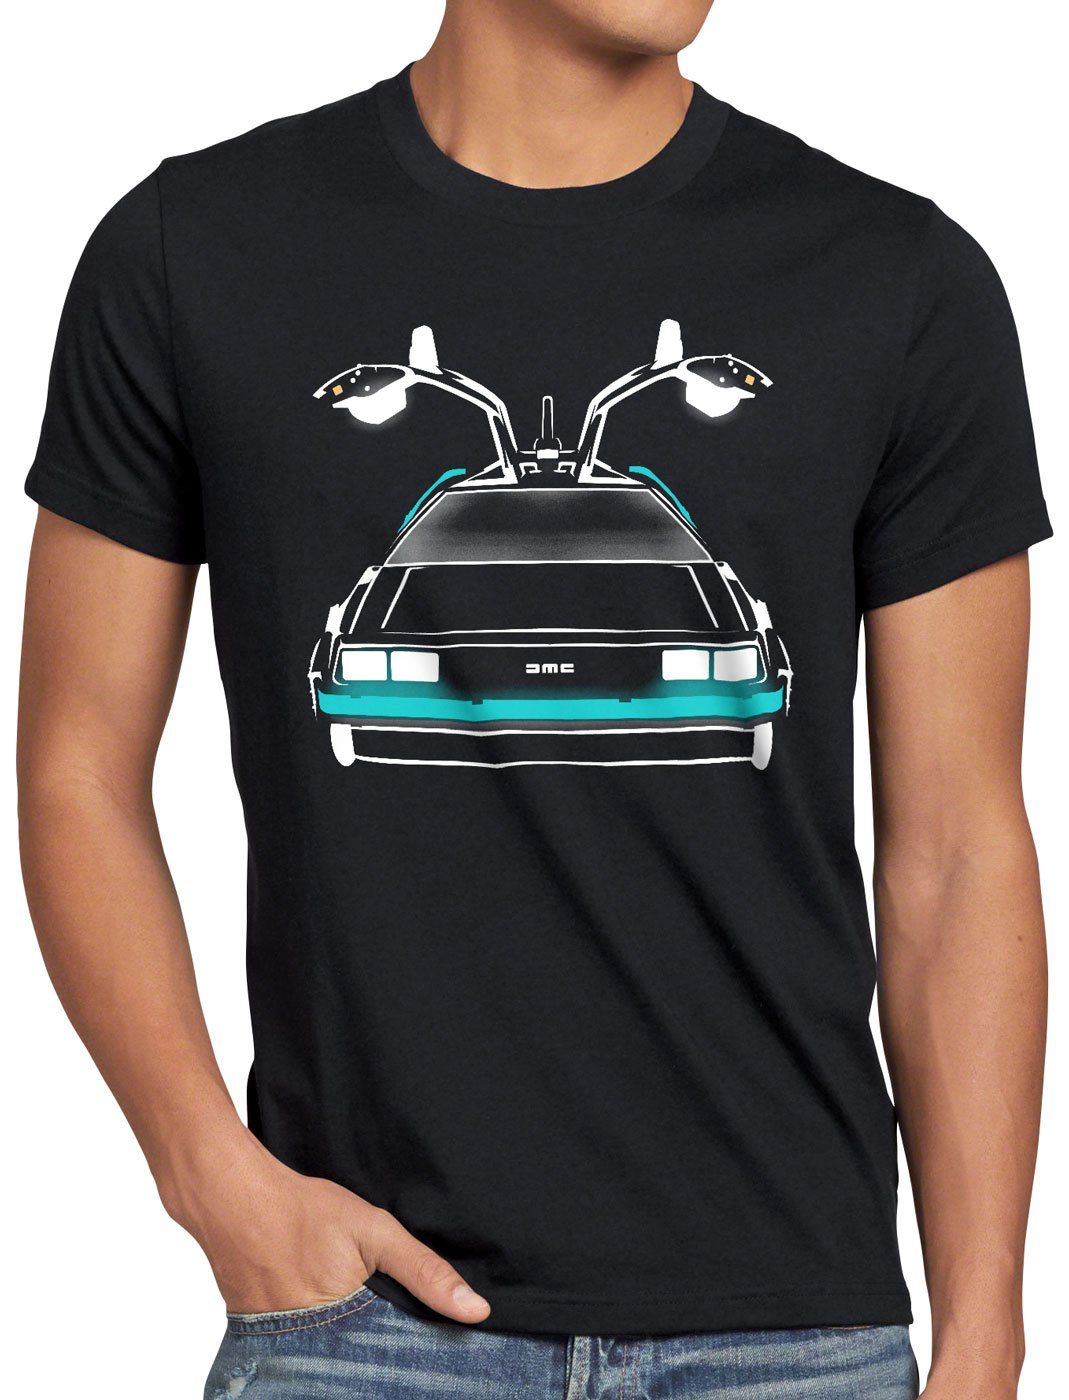 style3 Print-Shirt Herren T-Shirt Delorean Speed of Light dmc-12 zeitreise mcfly auto